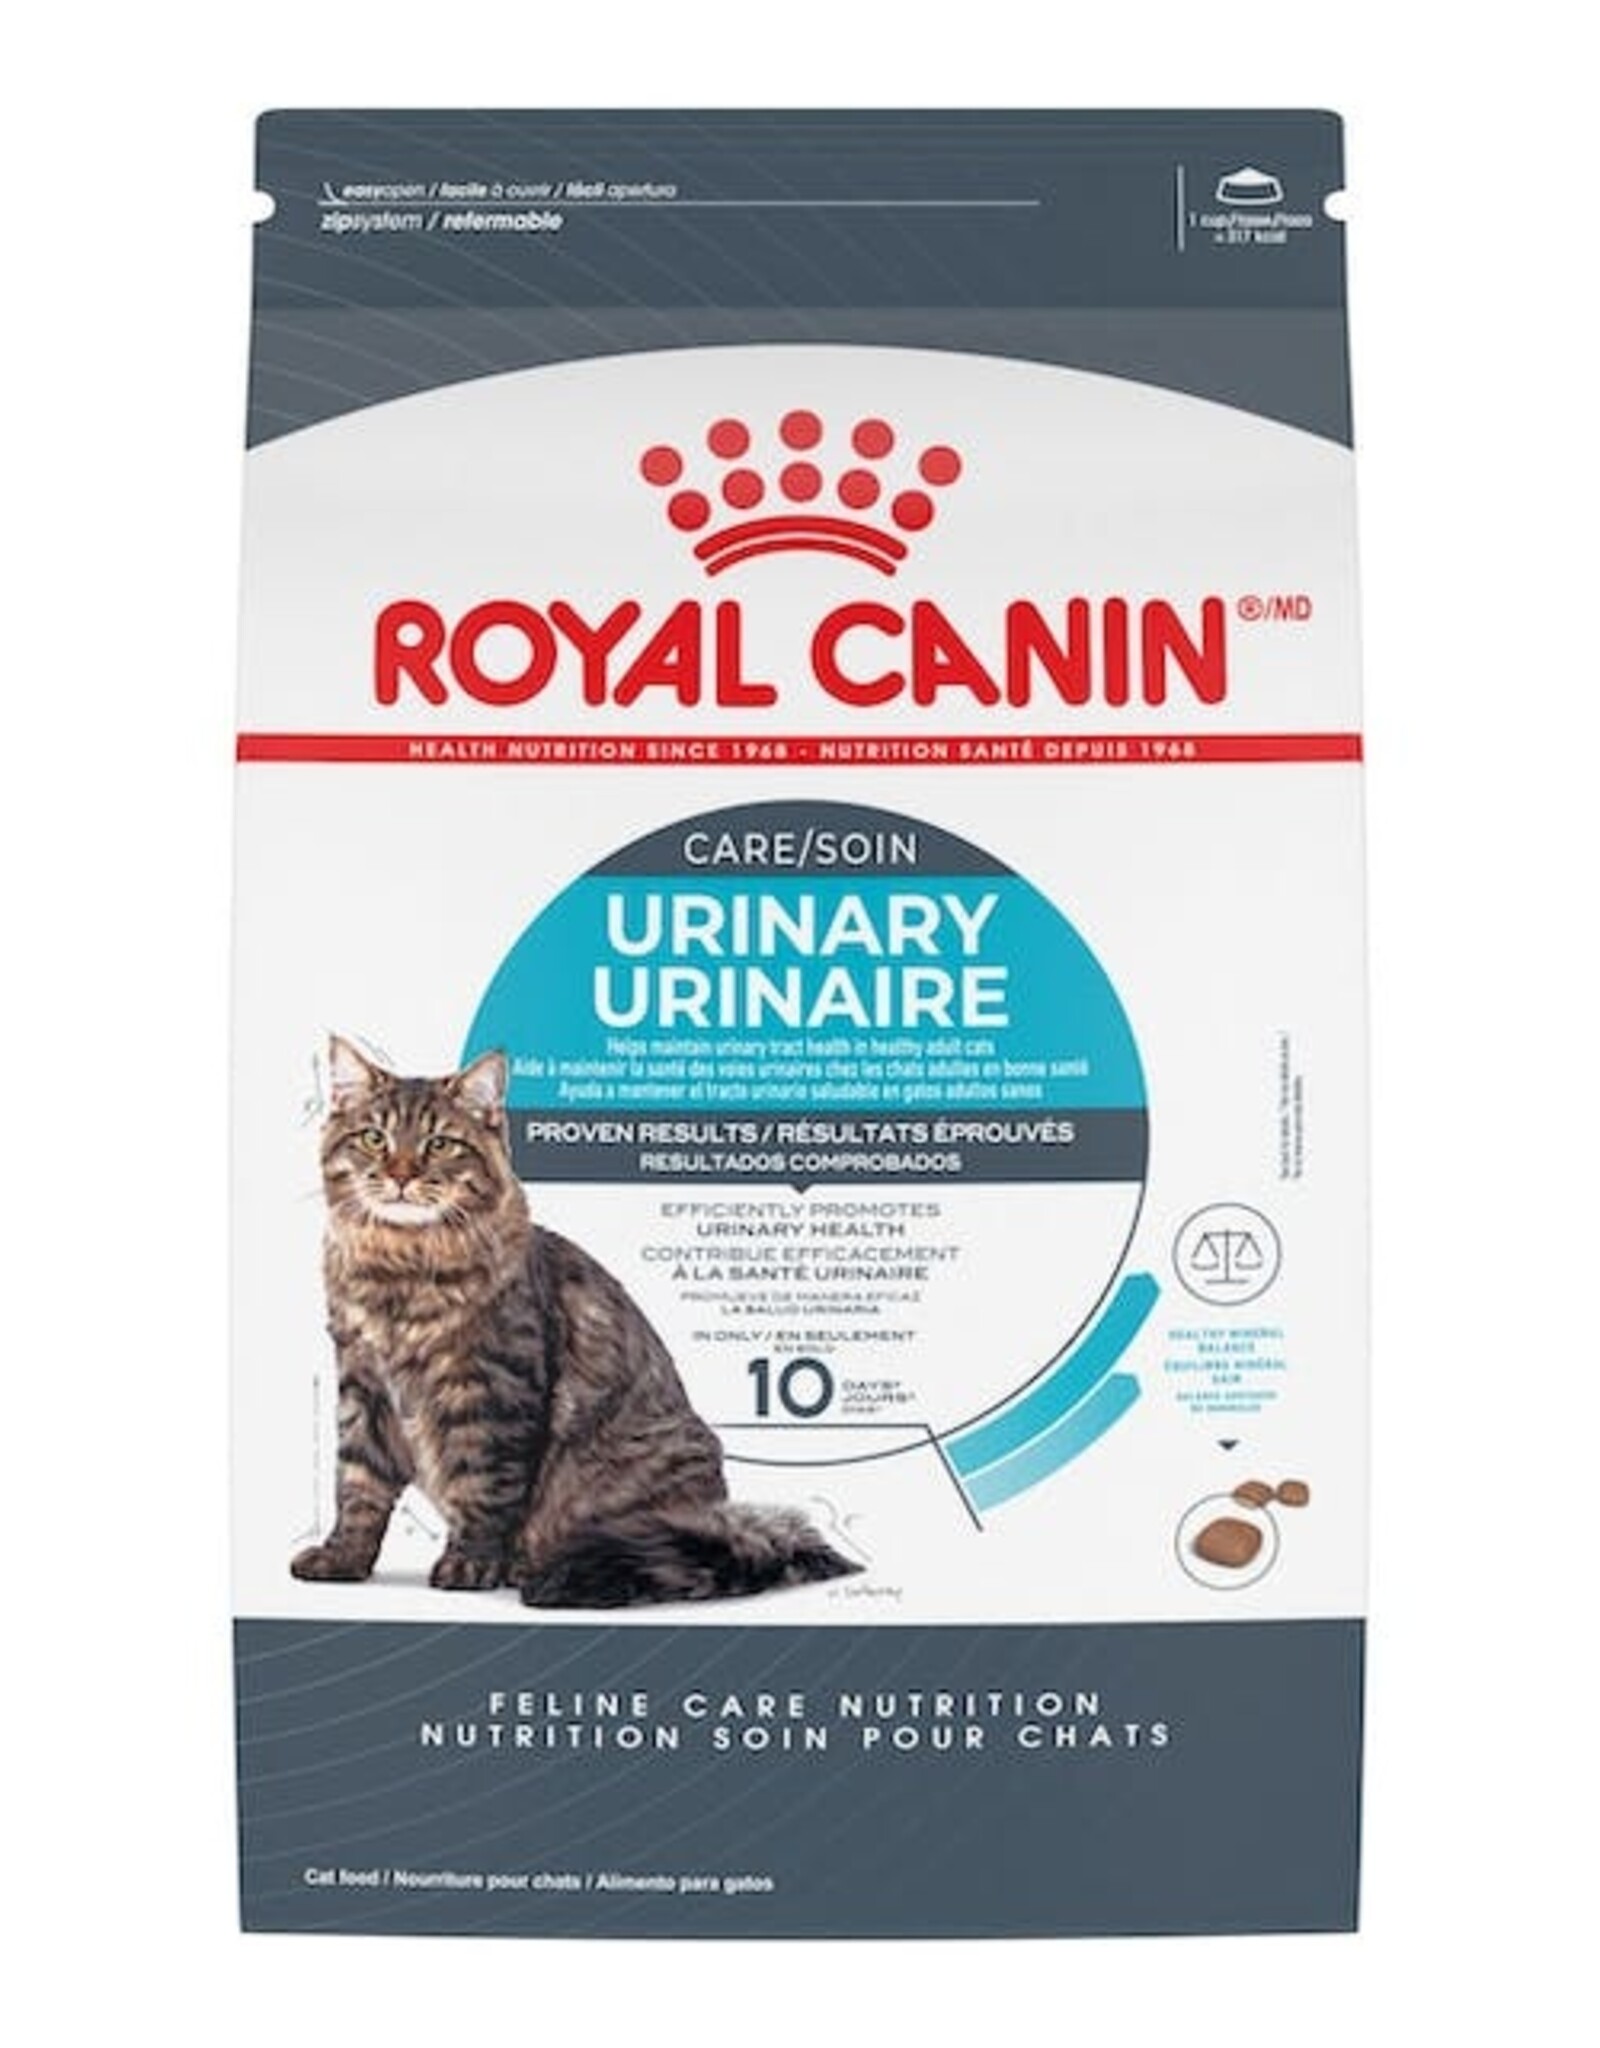 ROYAL CANIN ROYAL CANIN CAT URINARY HEALTH 3 LBS